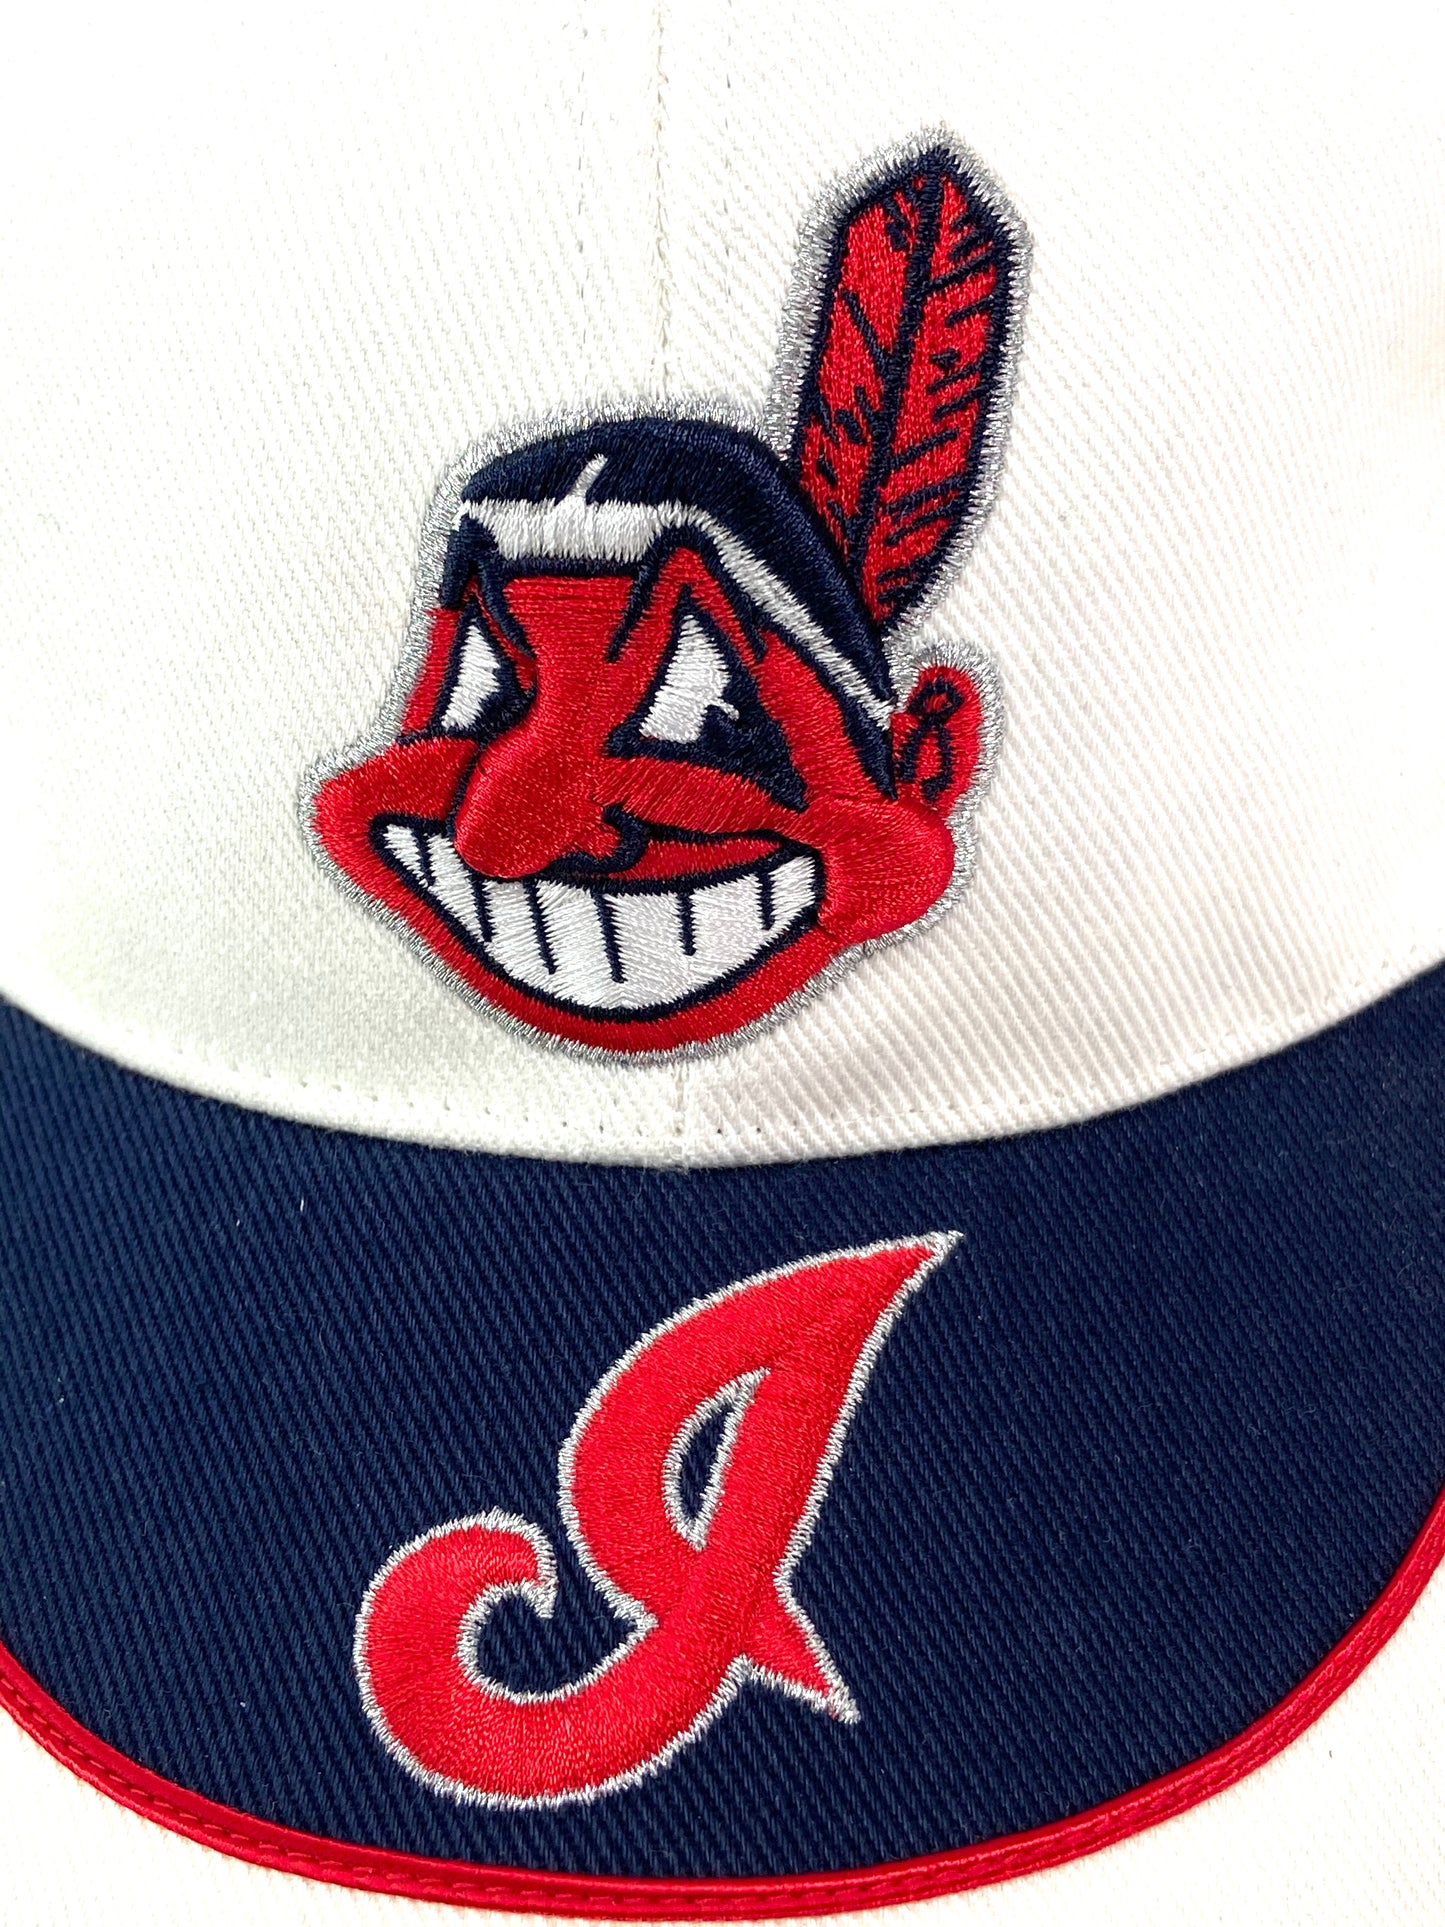 Cleveland Indians Vintage MLB White/Navy Hat by Twins Enterprise